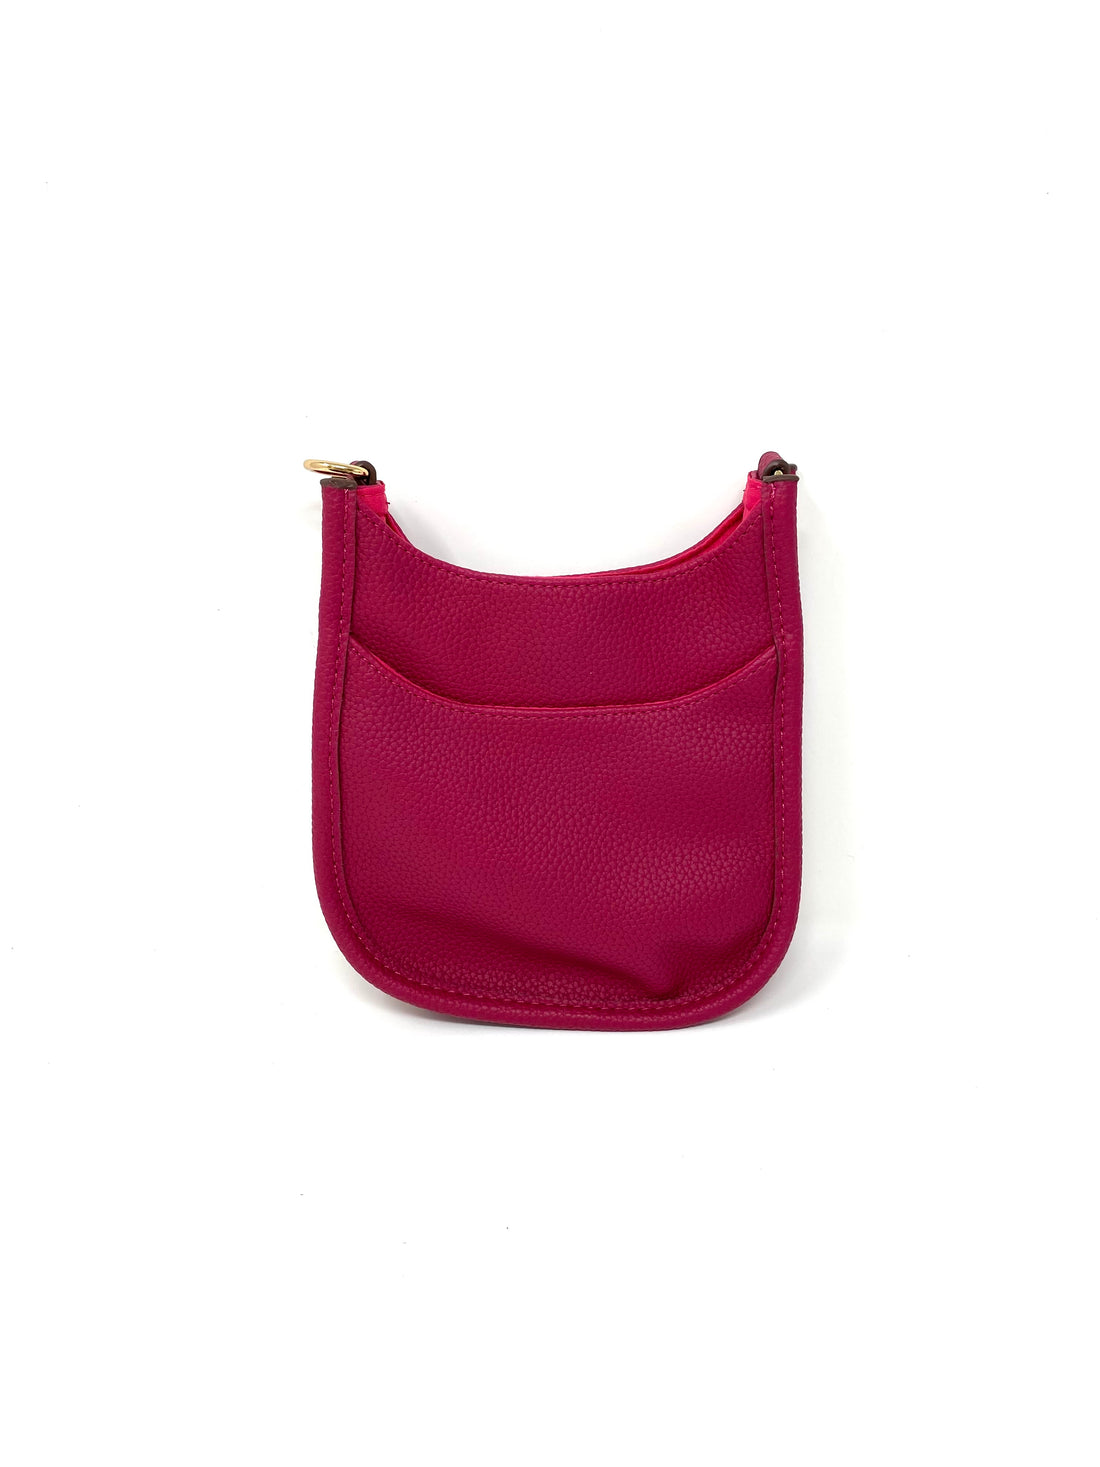 Mini Saddle Bag in Vegan Leather in Berry